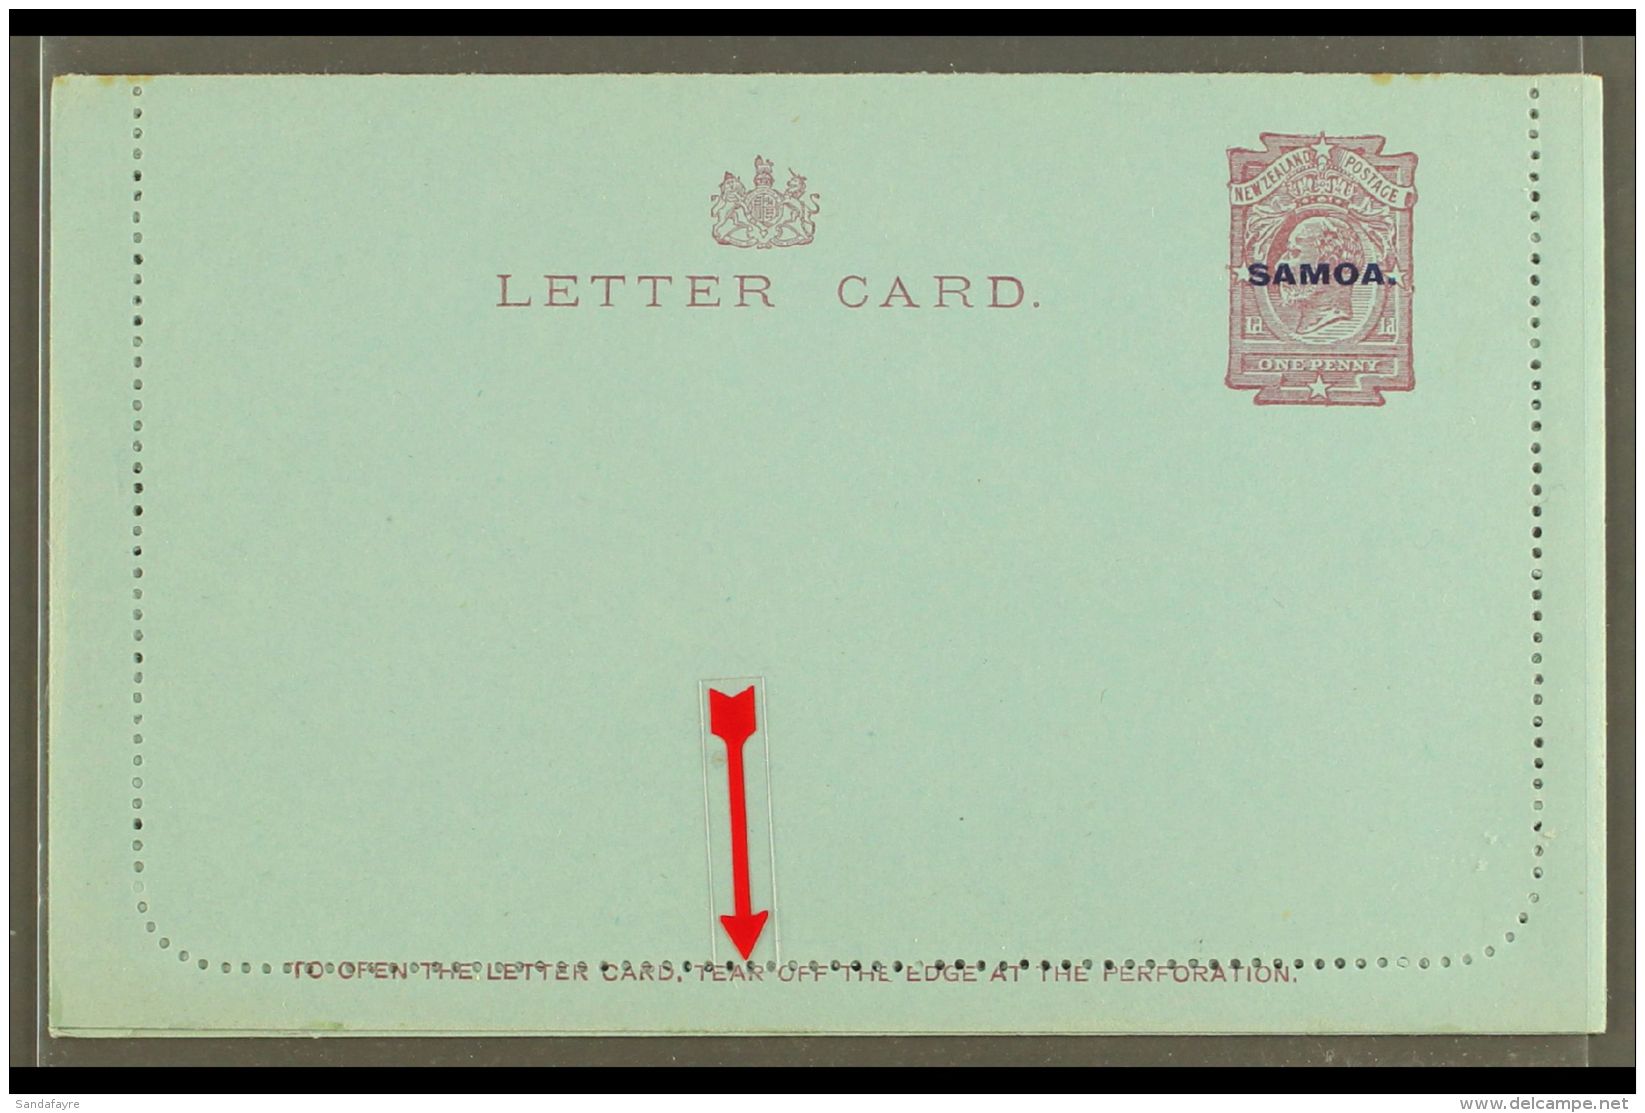 1914 LETTER CARD 1d Dull Claret On Blue, Inscription 94mm, H&amp;G 1a, Unused, Broken Second "T" In "LETTER CARD,"... - Samoa (Staat)